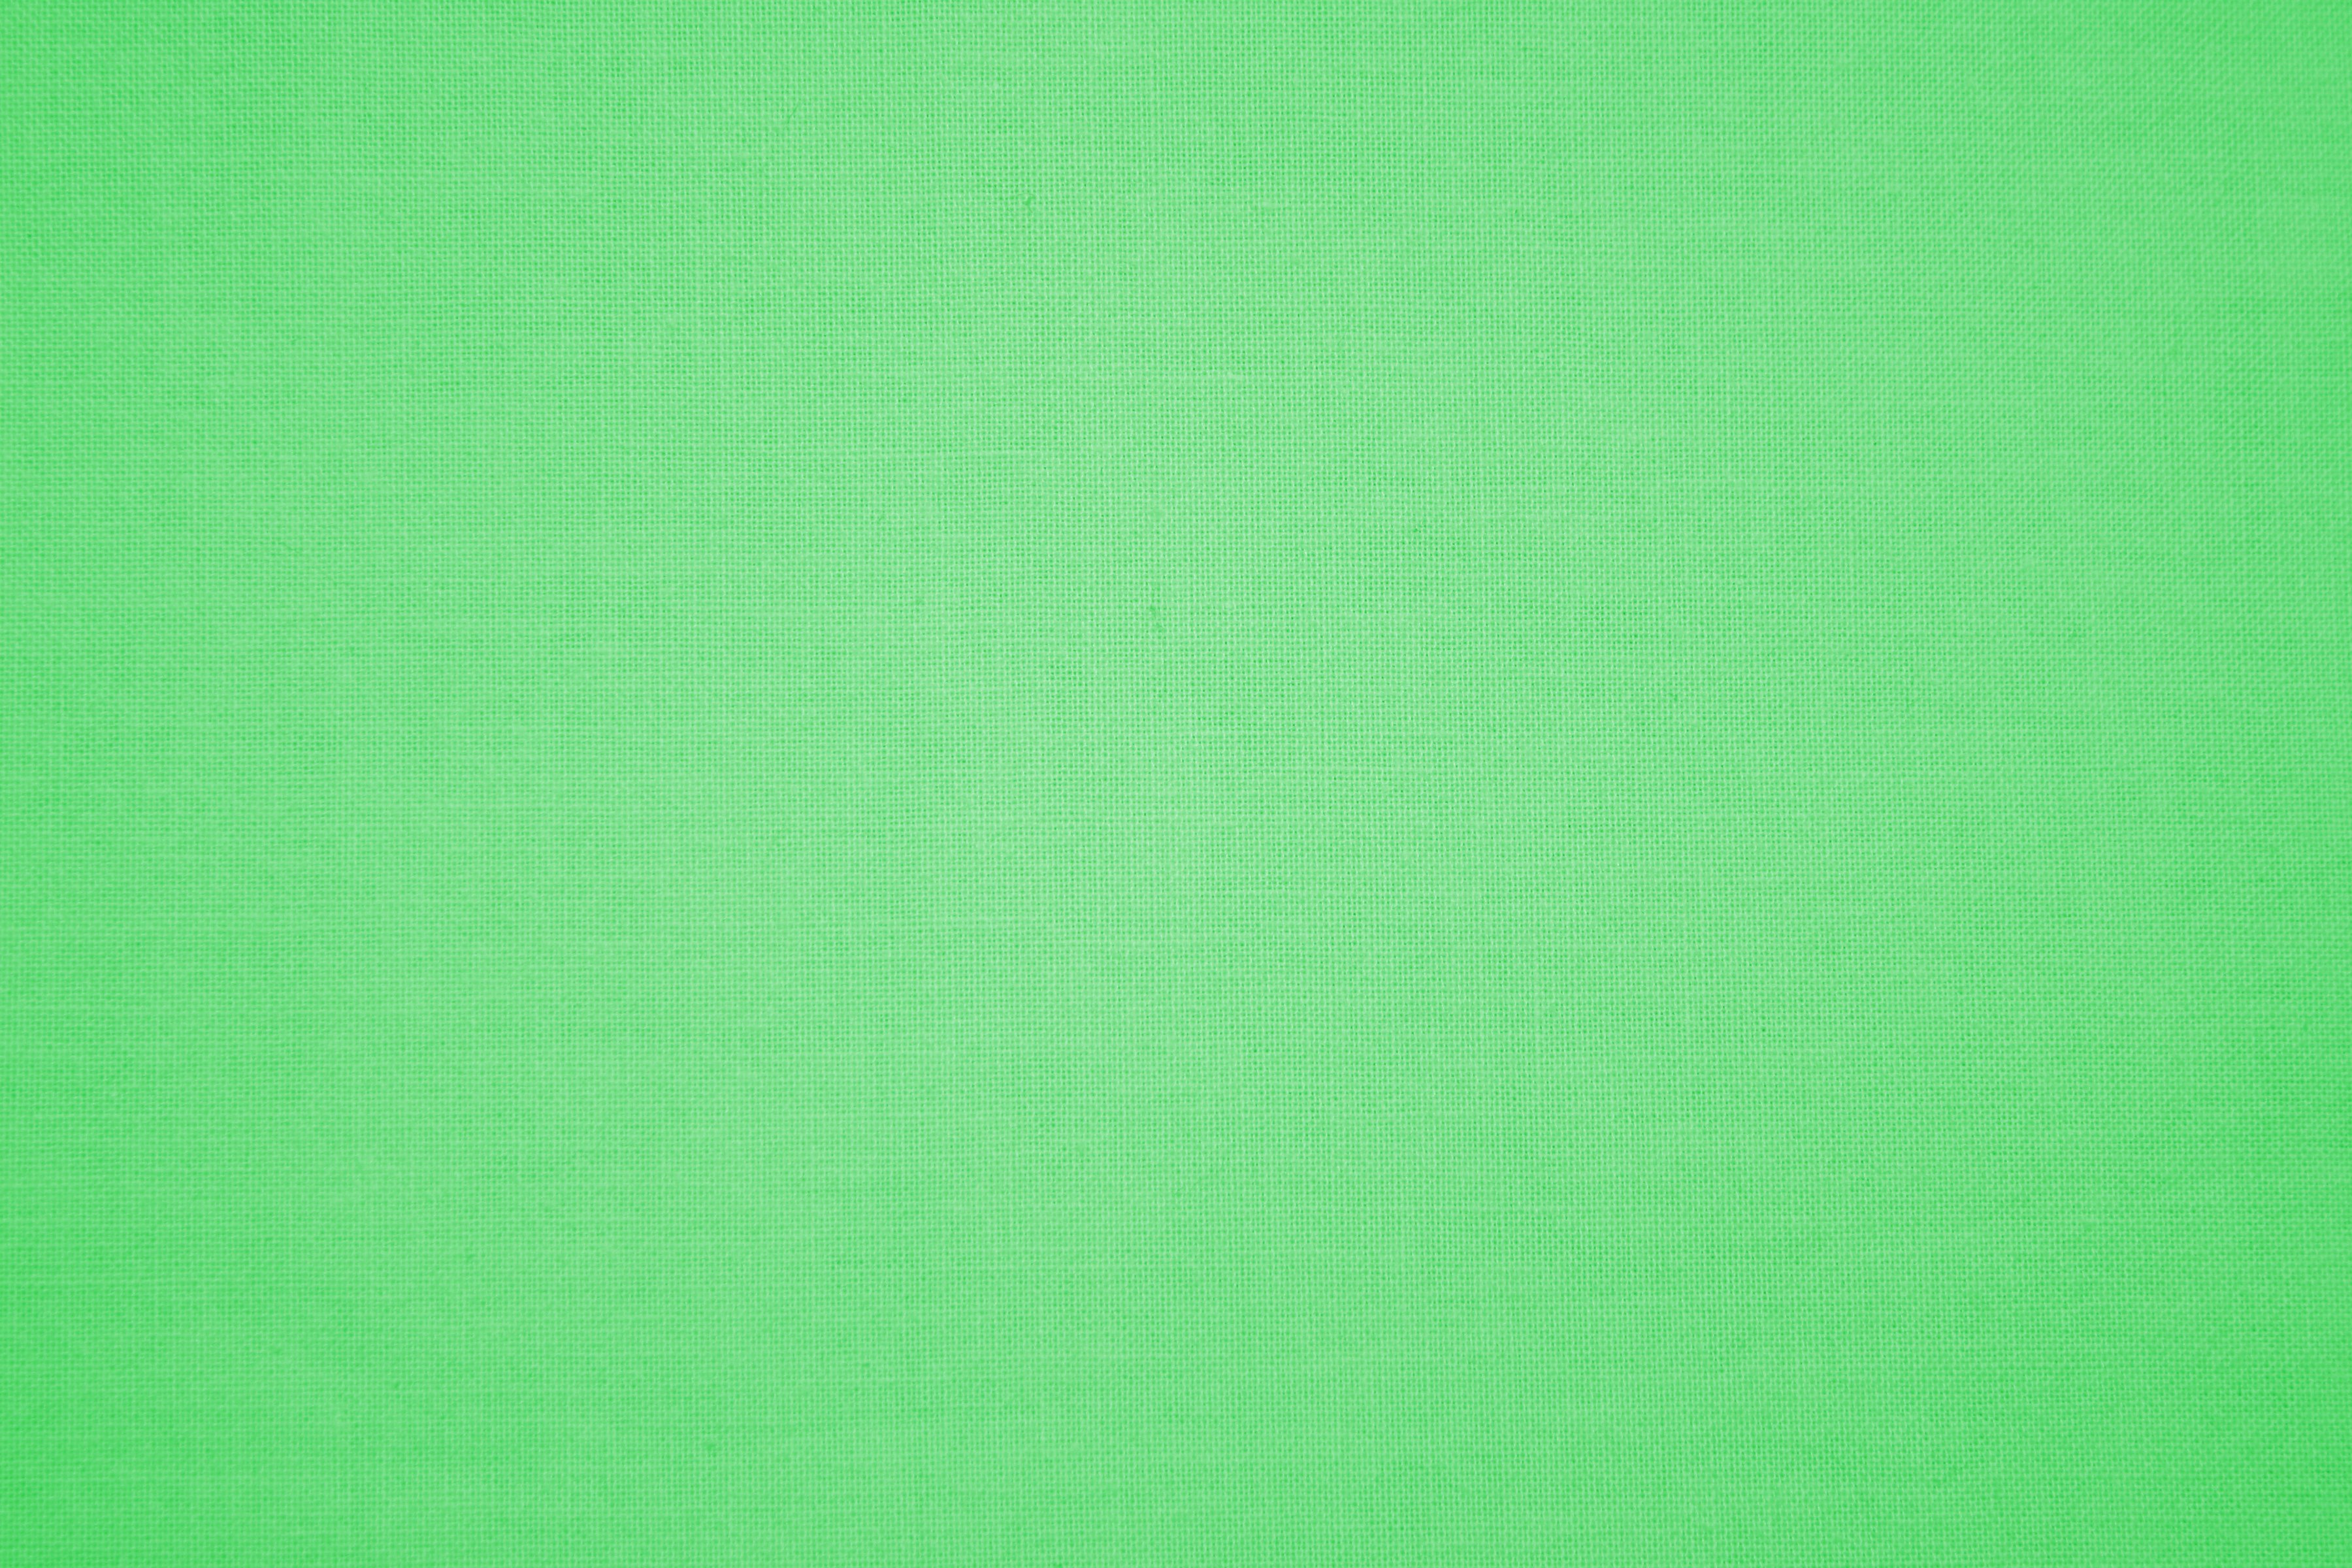 plain light green backgrounds